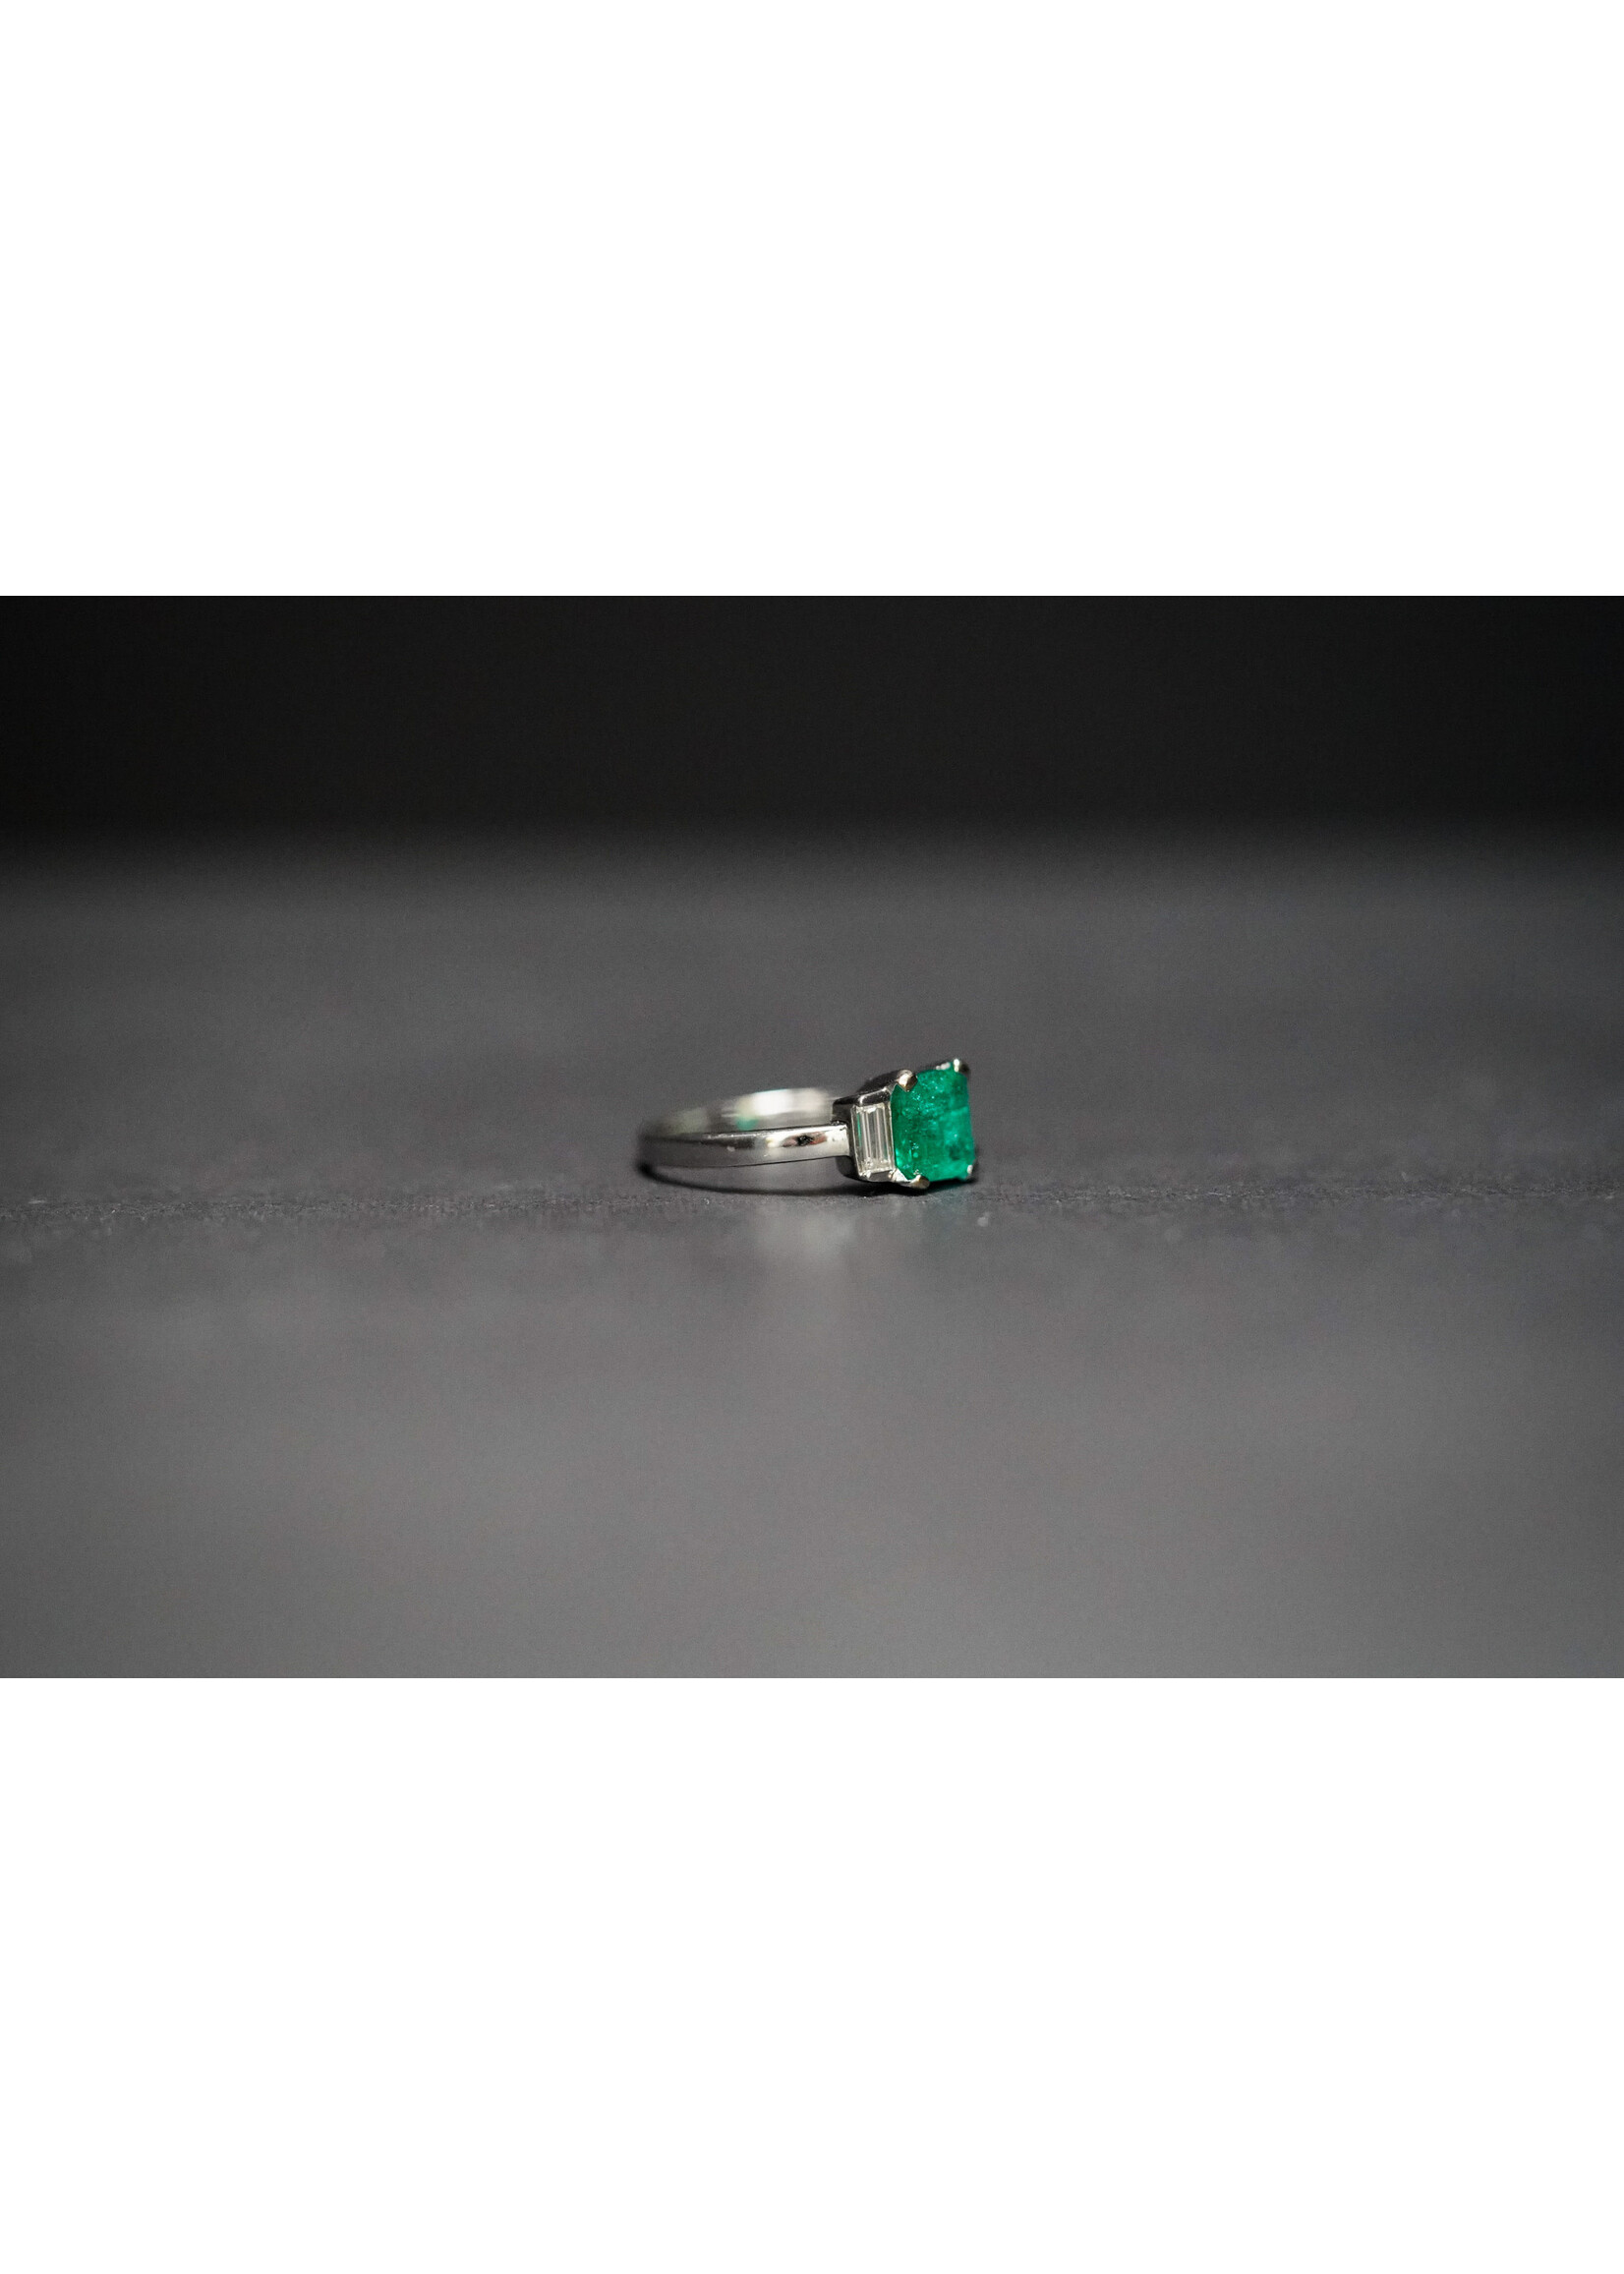 18KW 2.7g 1.67ctw (1.37ctr) Emerald & Diamond Fashion Ring (size 6)